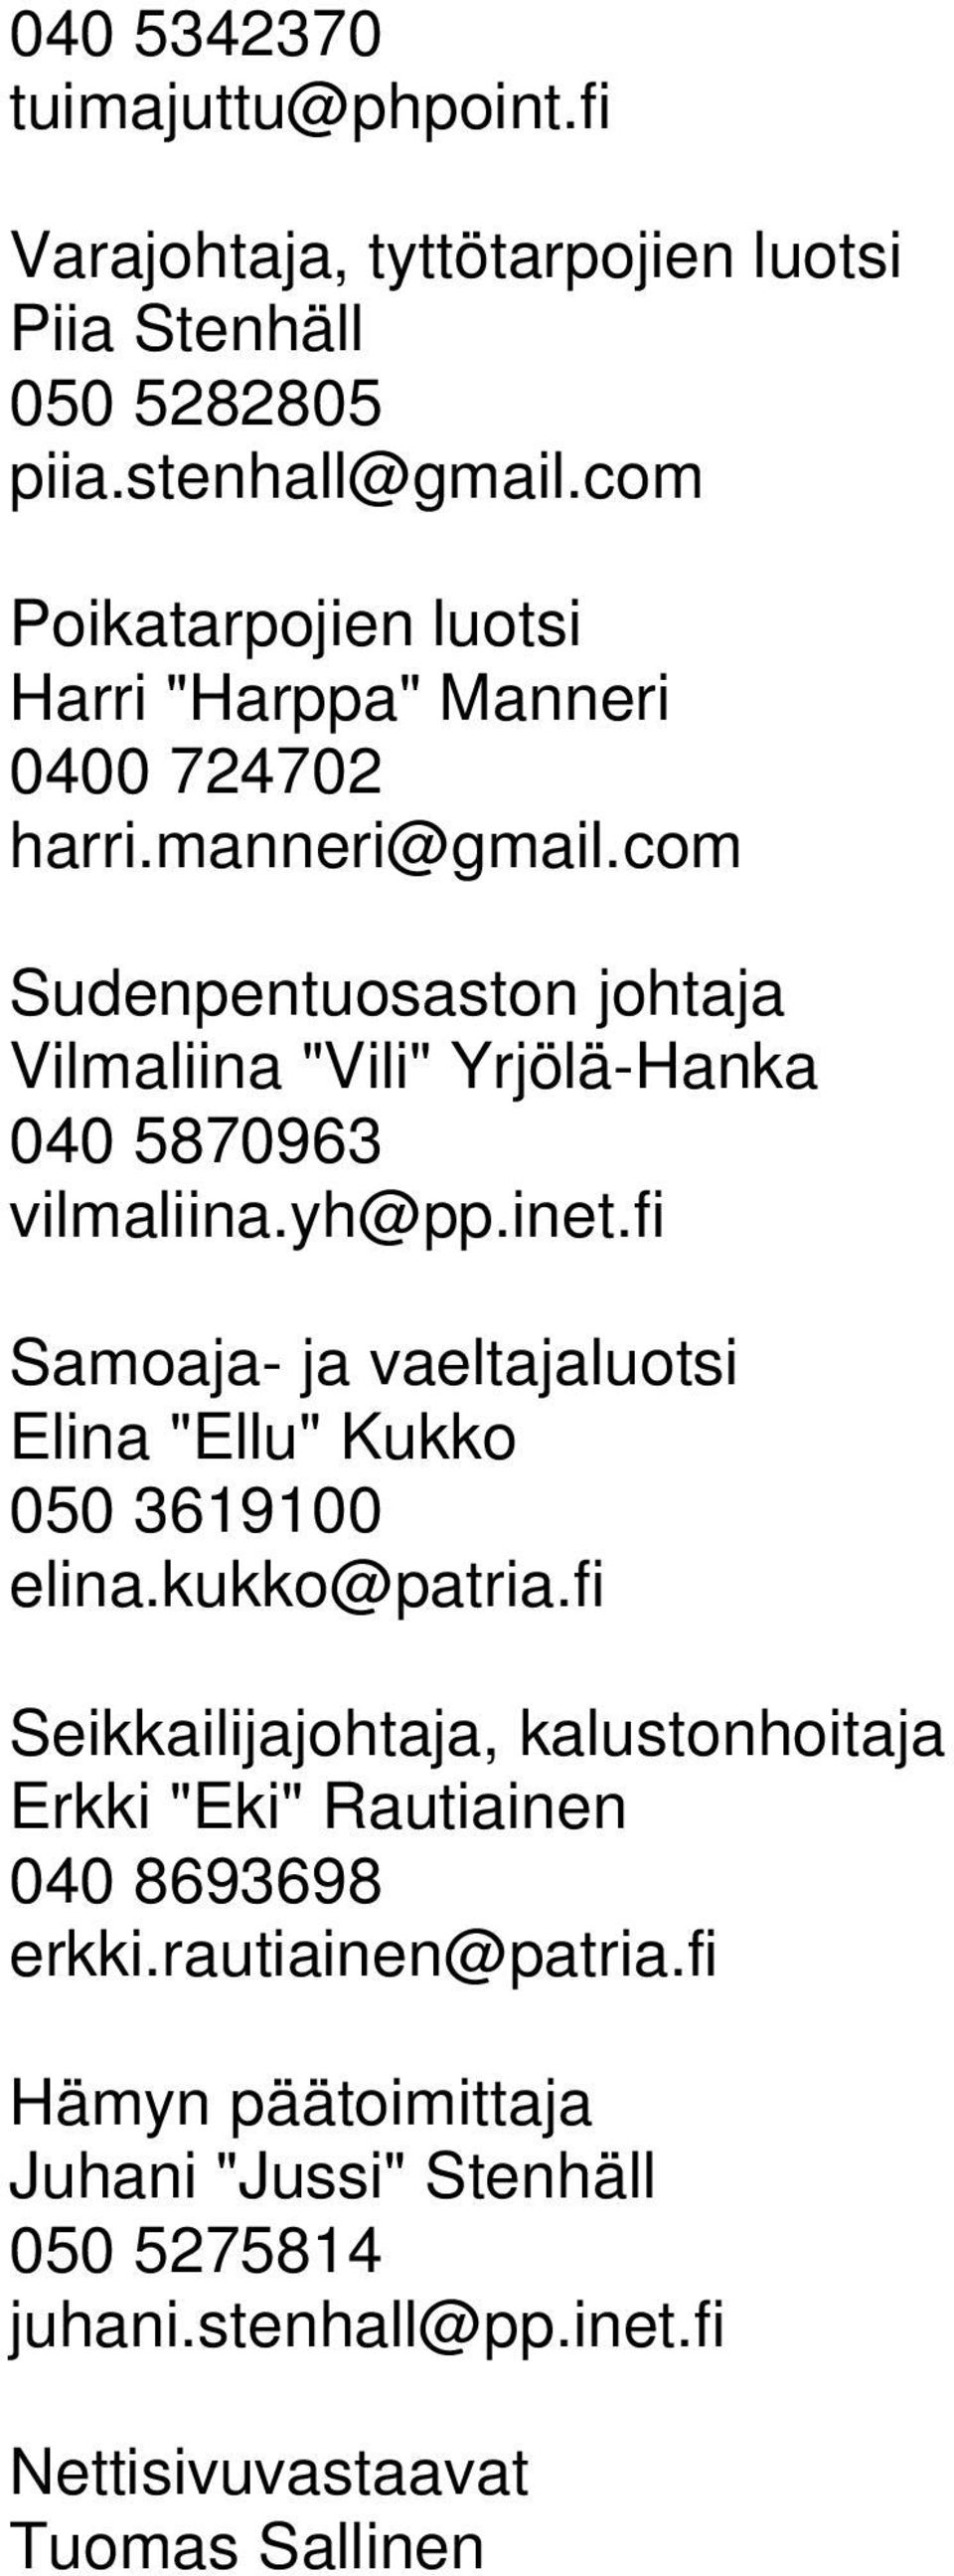 com Sudenpentuosaston johtaja Vilmaliina "Vili" Yrjölä-Hanka 040 5870963 vilmaliina.yh@pp.inet.